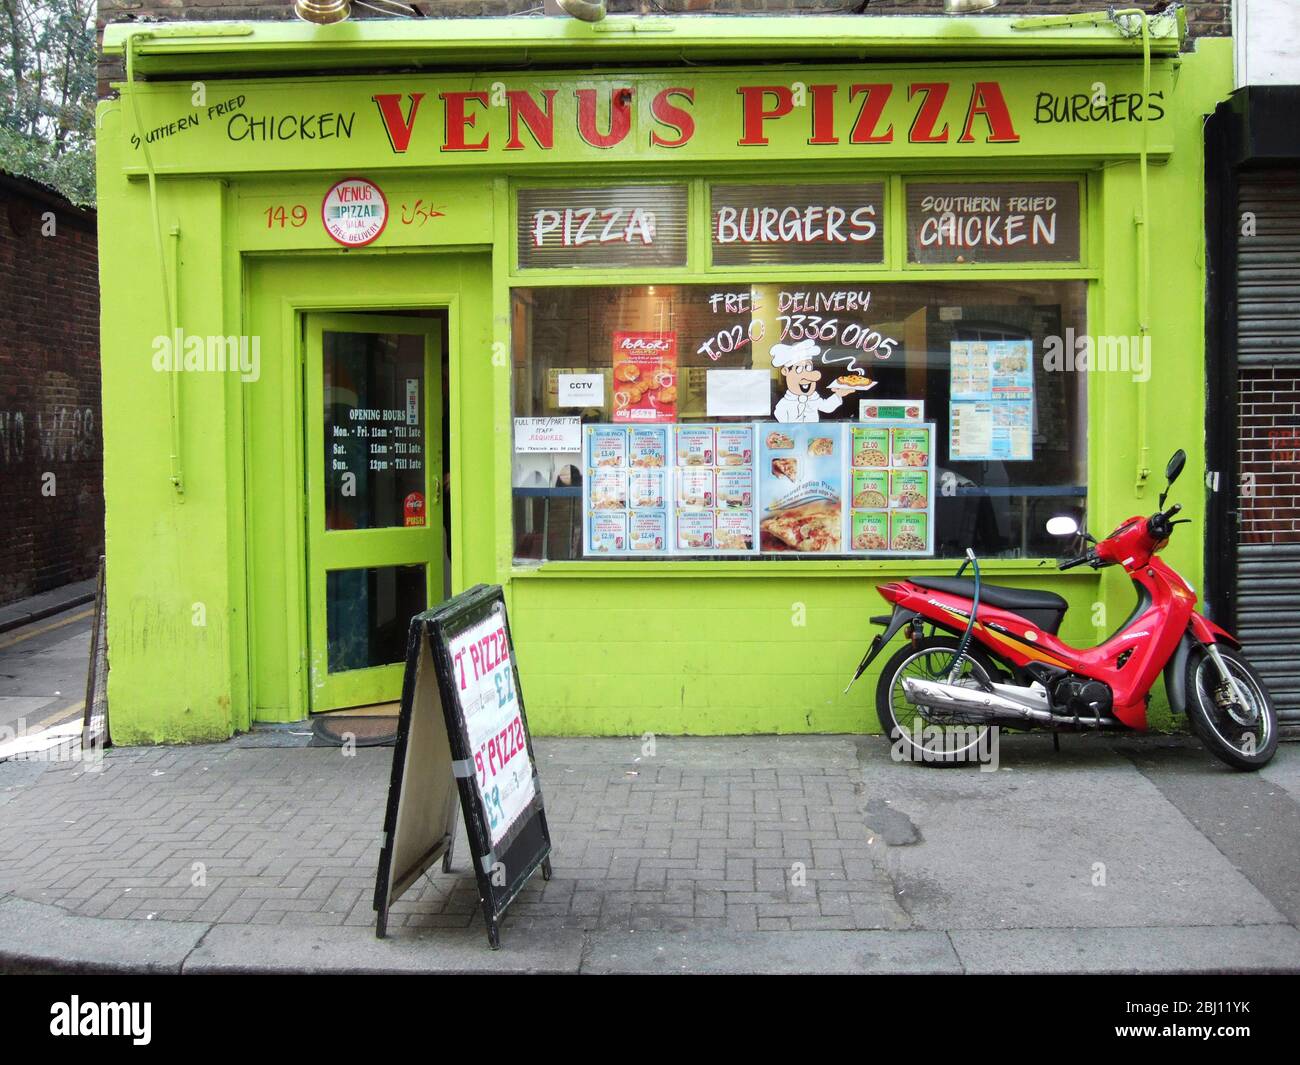 Fassade der Venus Pizza in Whitecross Markt London - Stockfoto